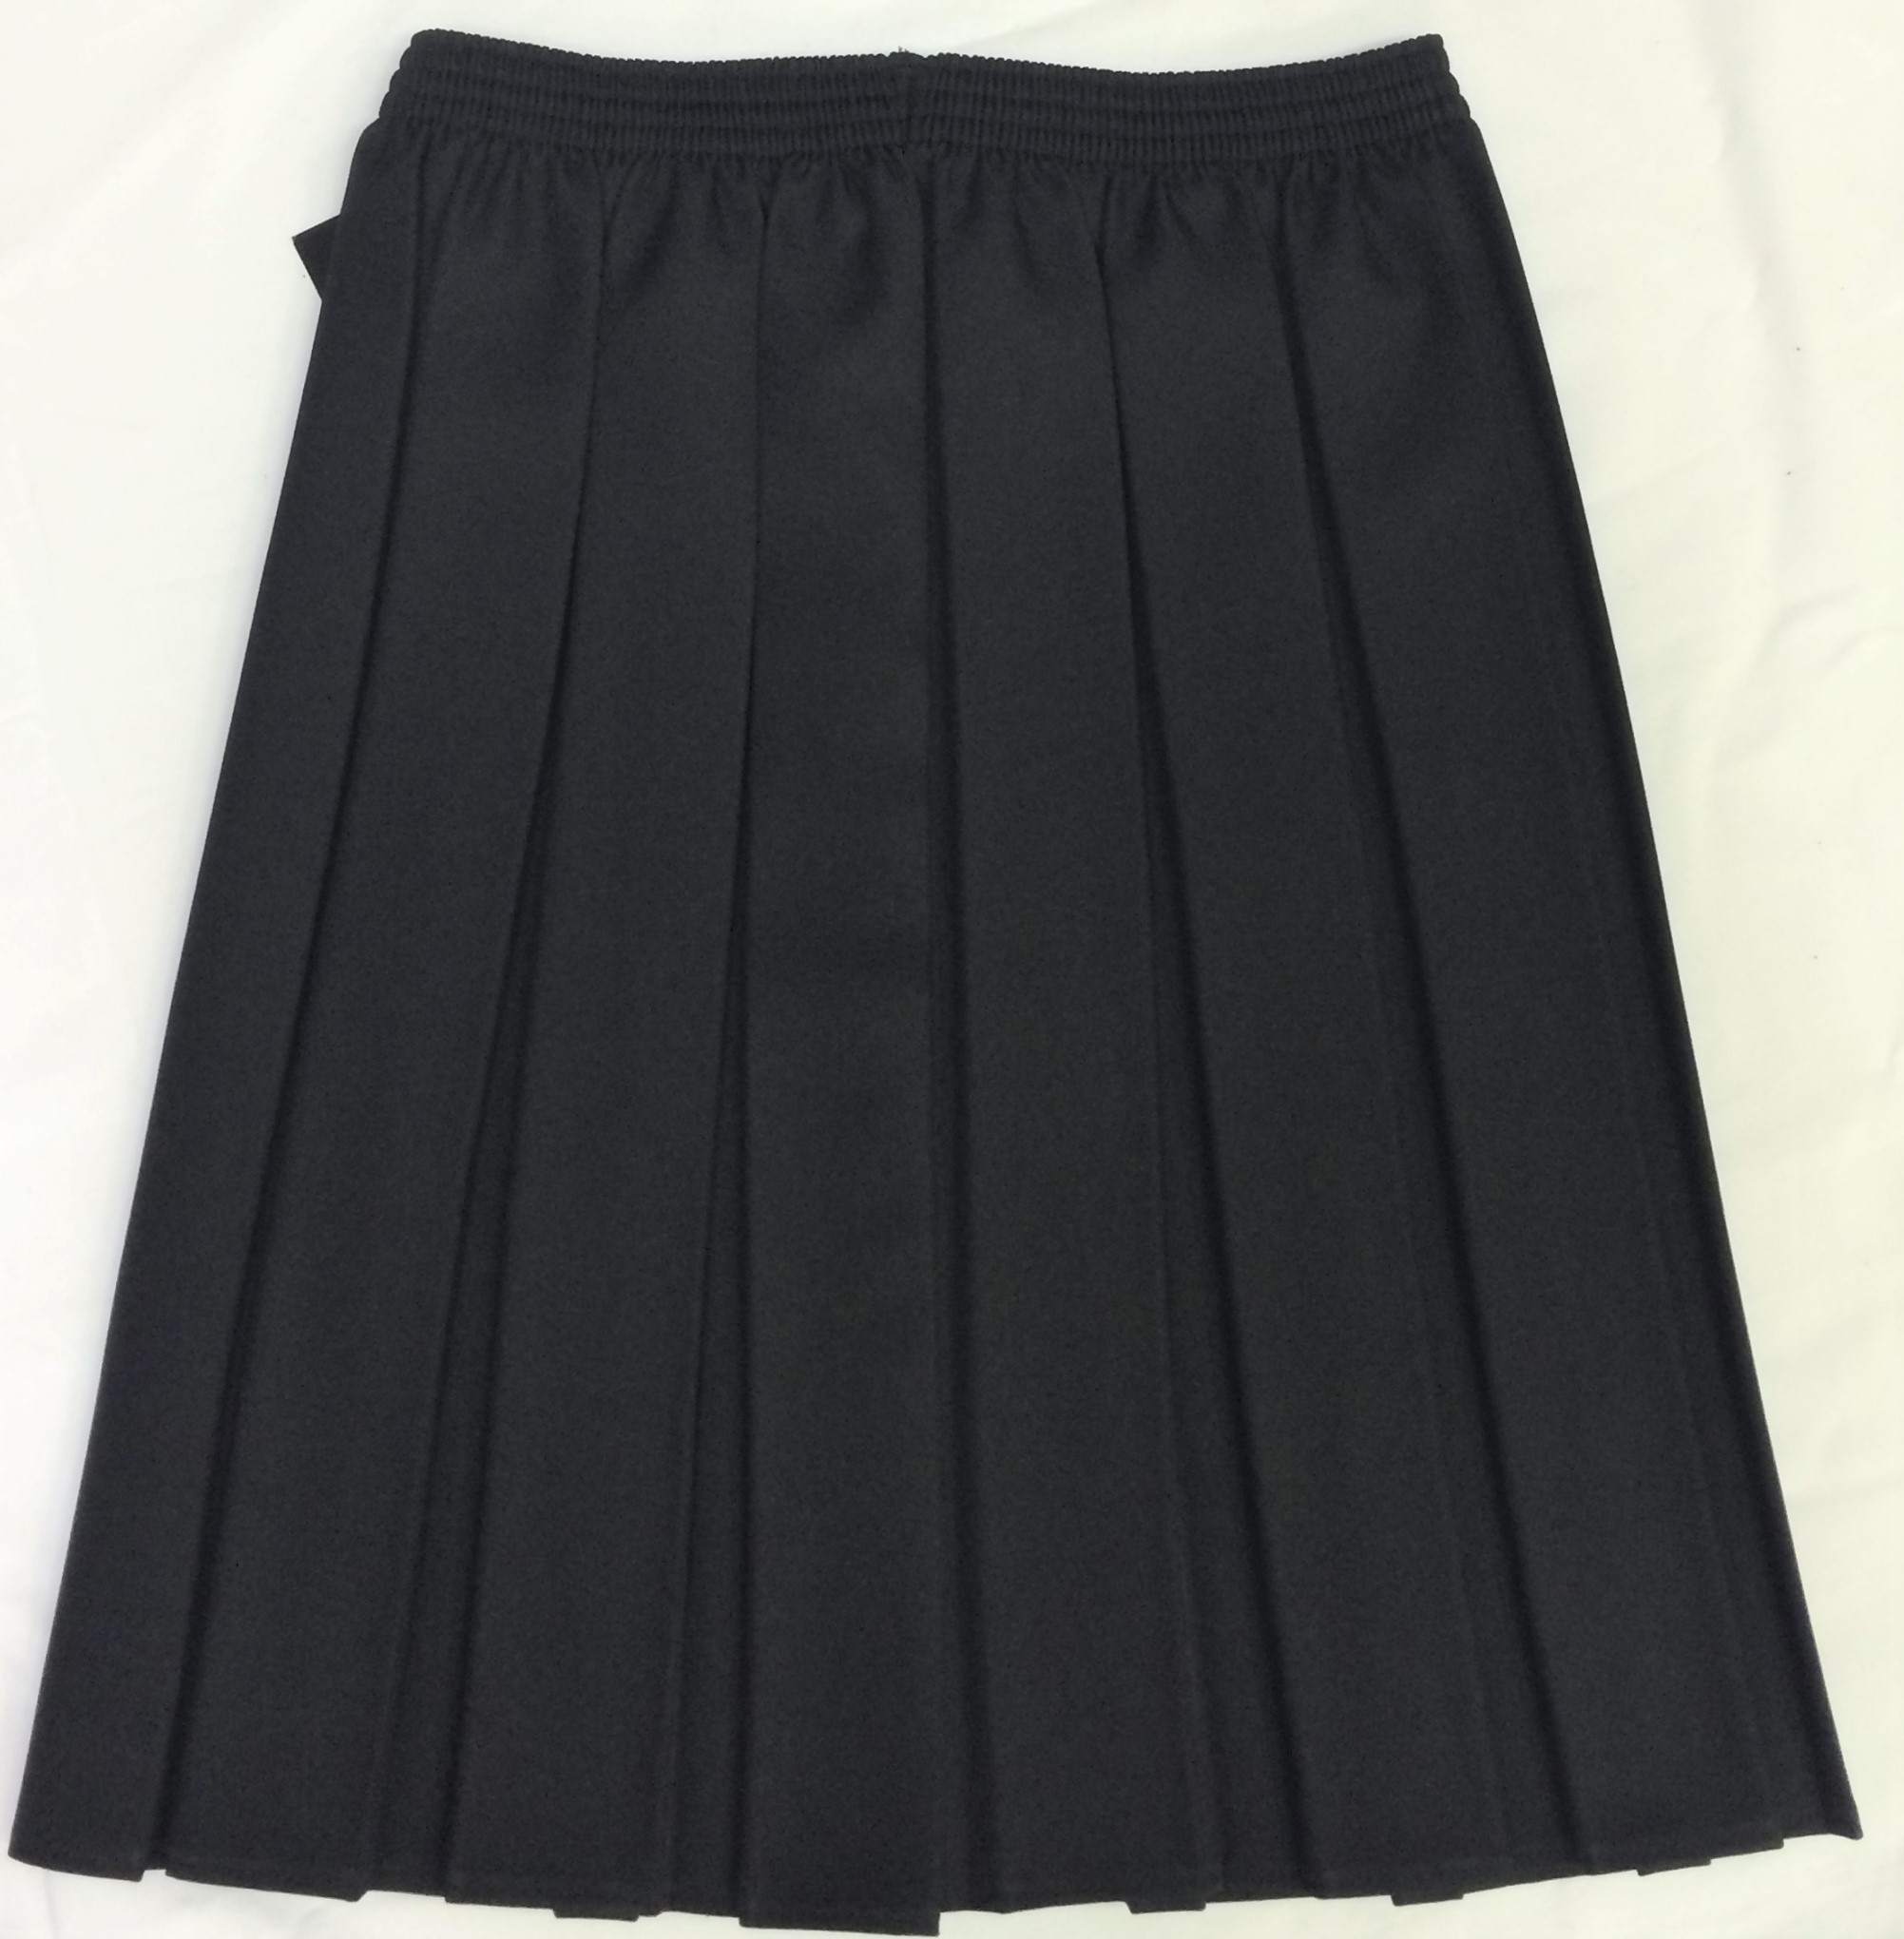 XXL XL UK M L Miss Chief Ages 2-20 Girls Ladies School Box Pleated Formal Elasticated Skirt